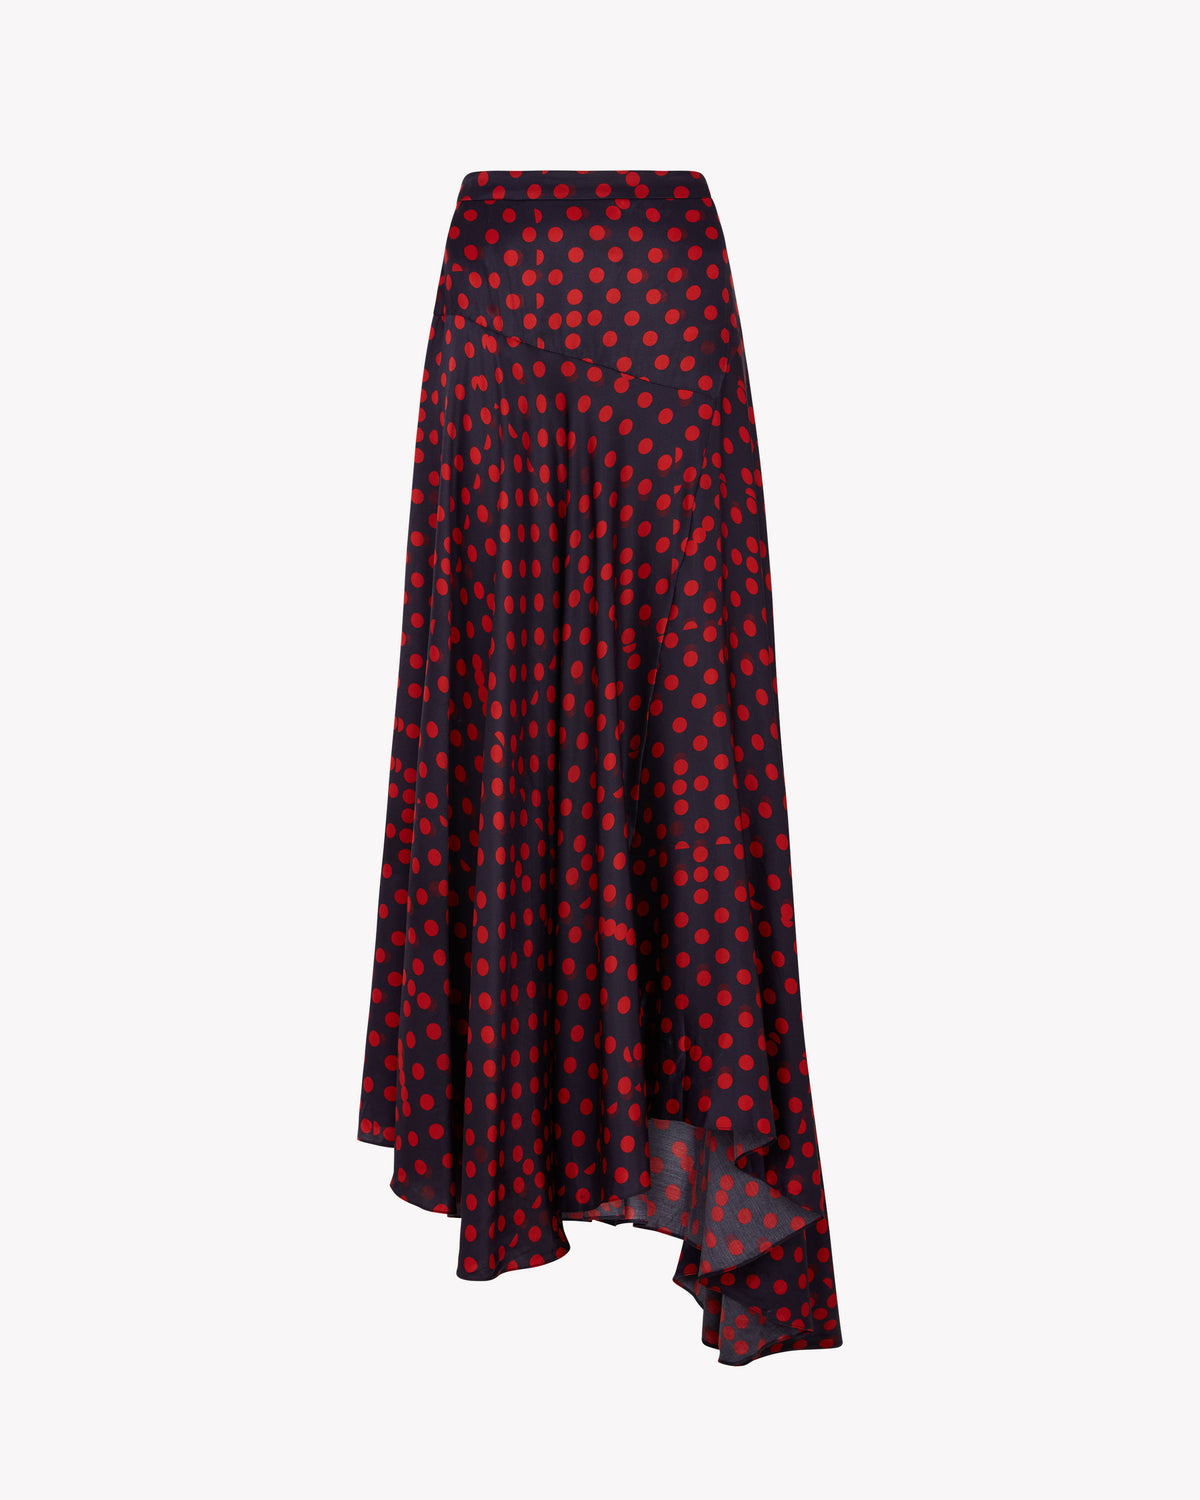 Graphic Polka Dot Asymmetric Maxi Skirt - Navy/Red